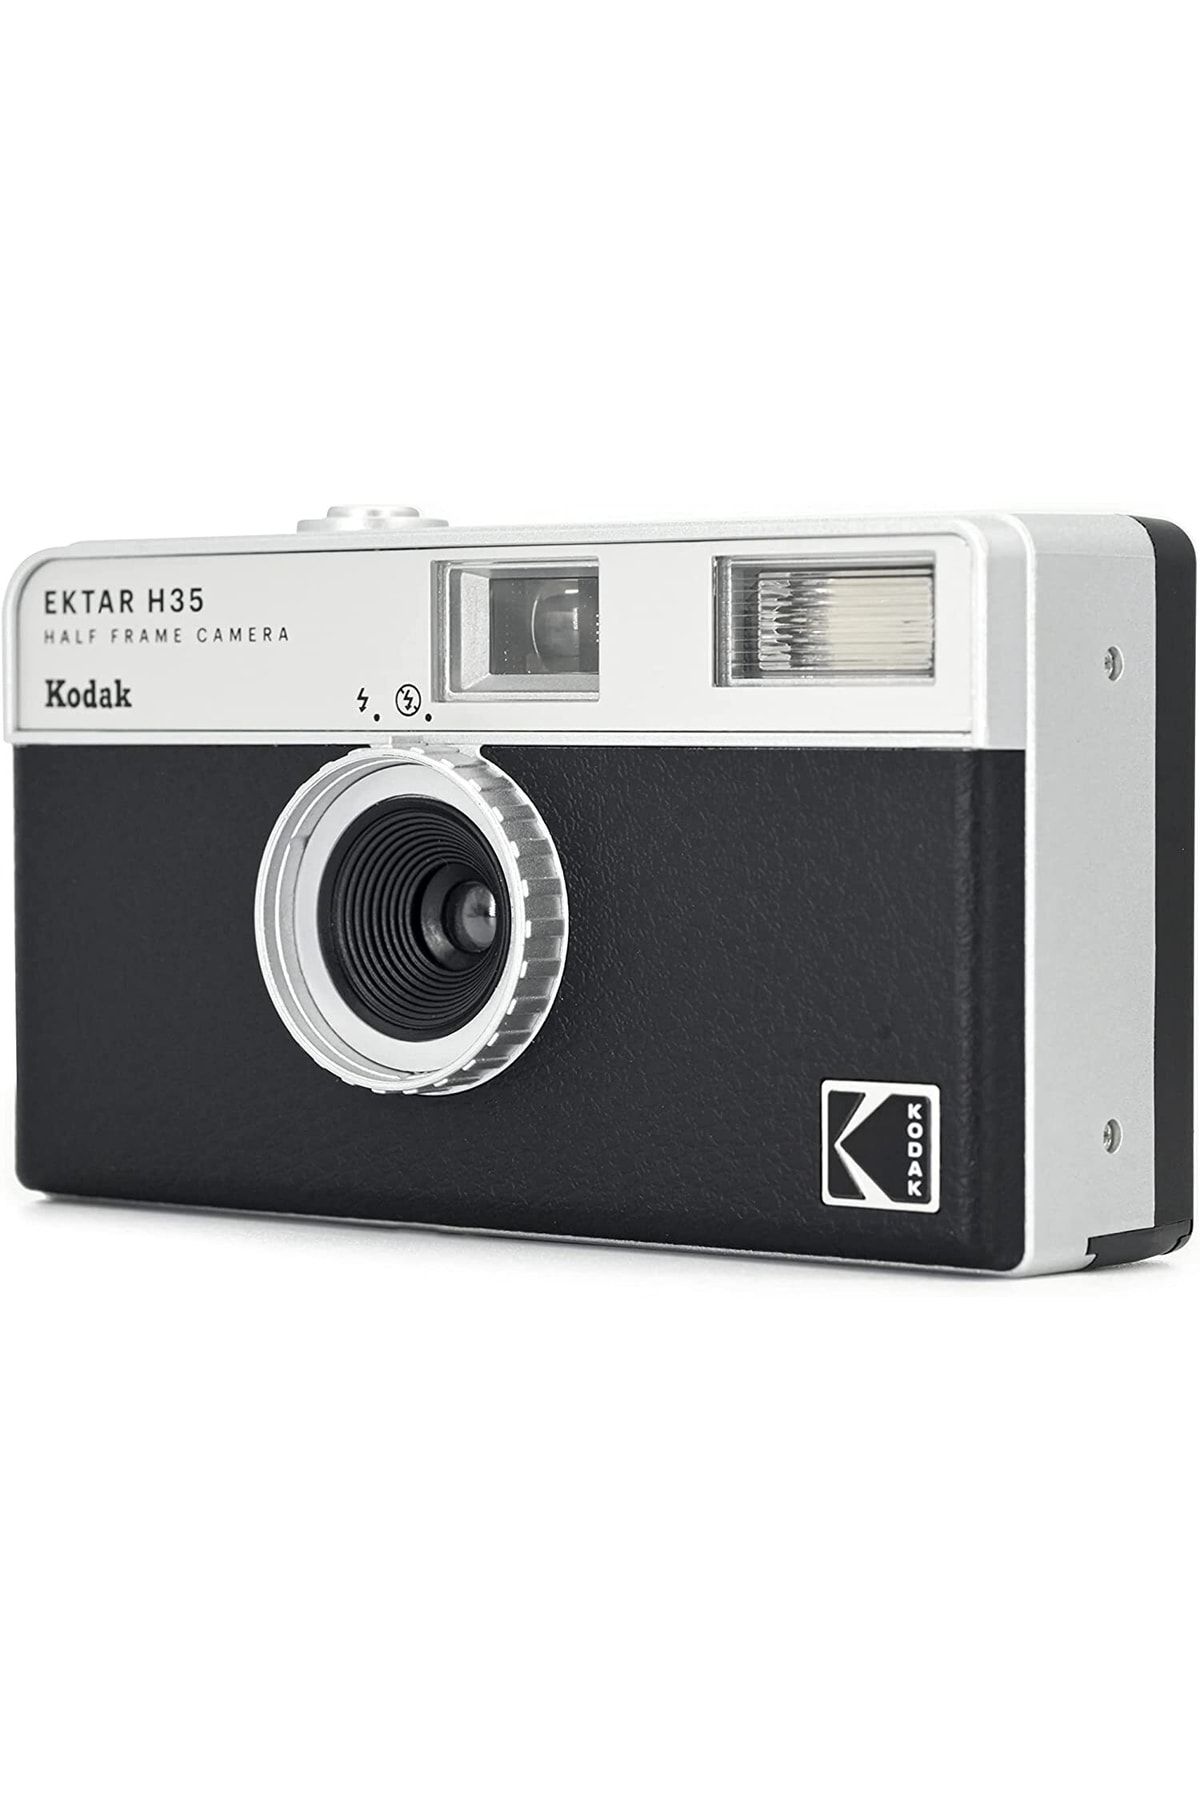 Kodak Ektar H35 Yarım Kare Film Kamera